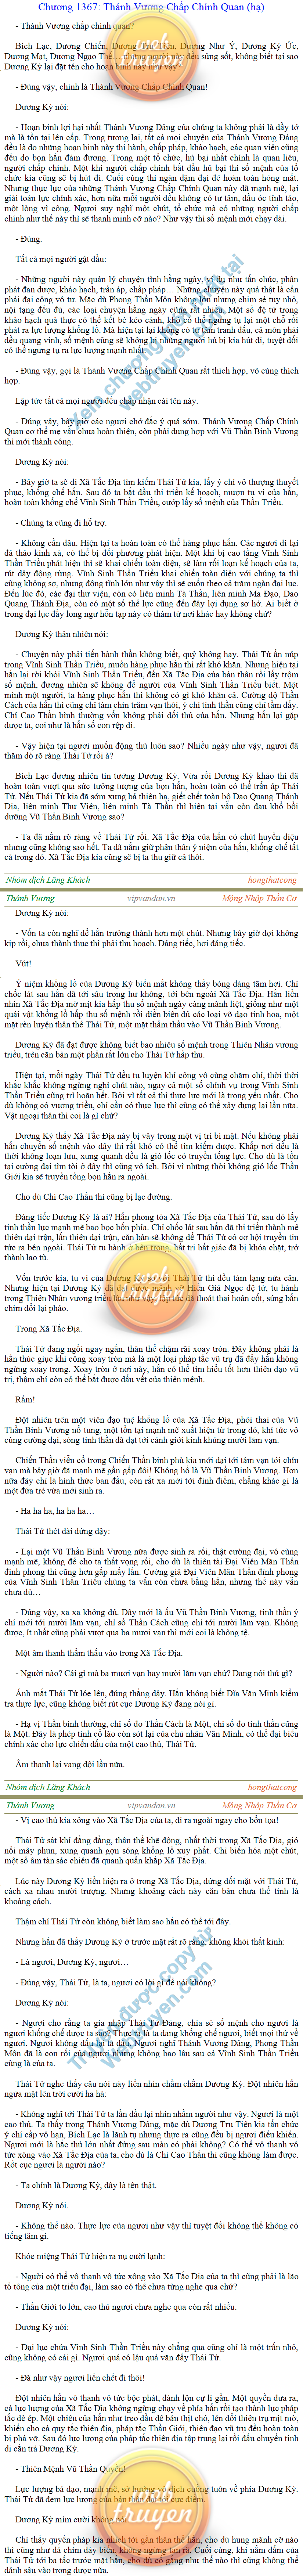 Thanh-vuong-1367.png